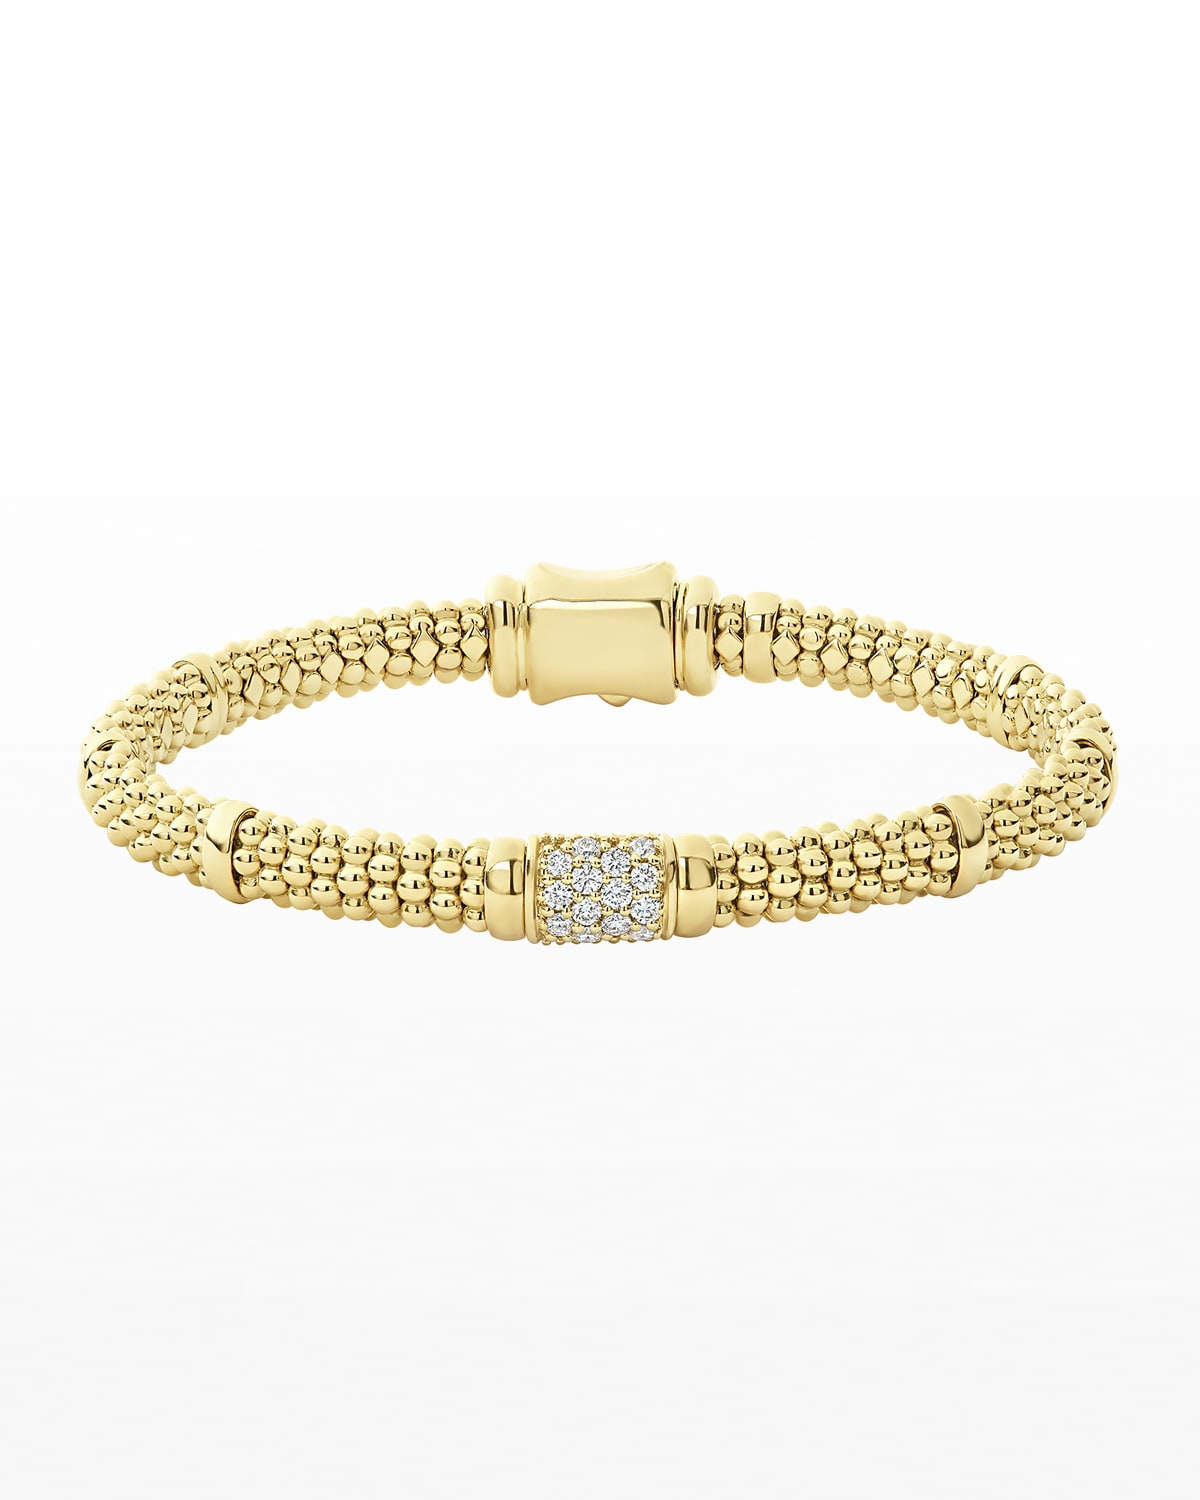 LAGOS 18k Caviar Gold Diamond Rope Bracelet - 9mm, Size M | Neiman Marcus